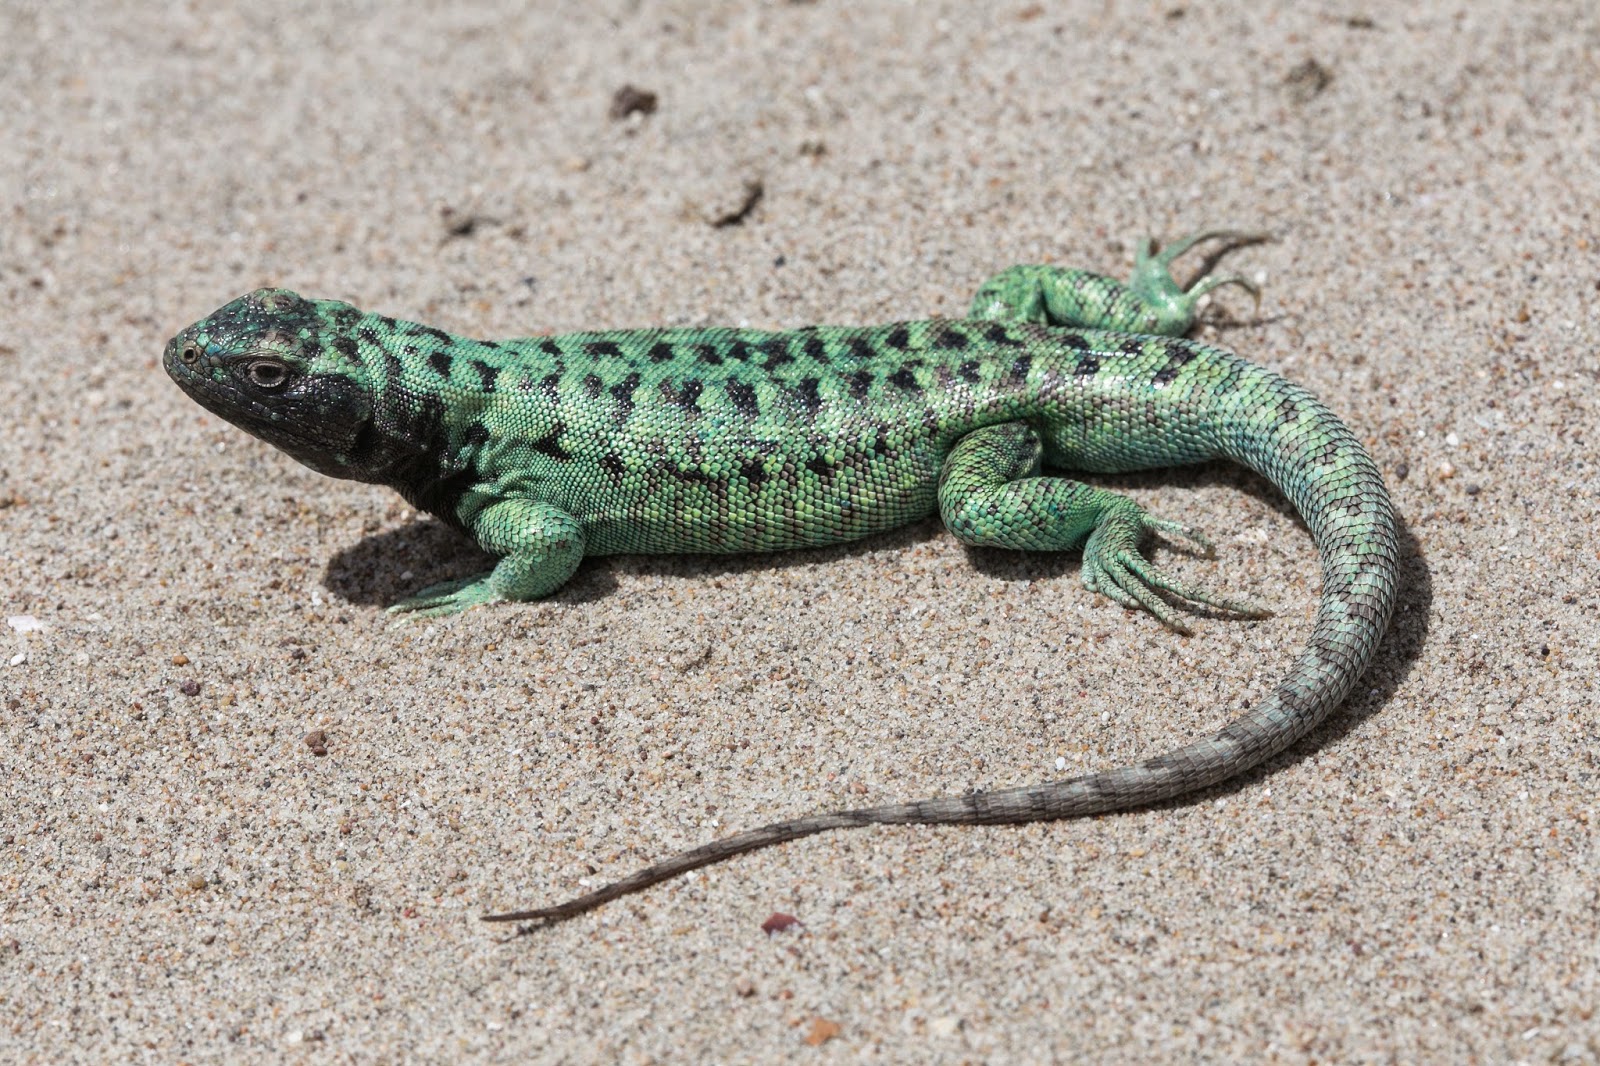 Green lizard in the sand